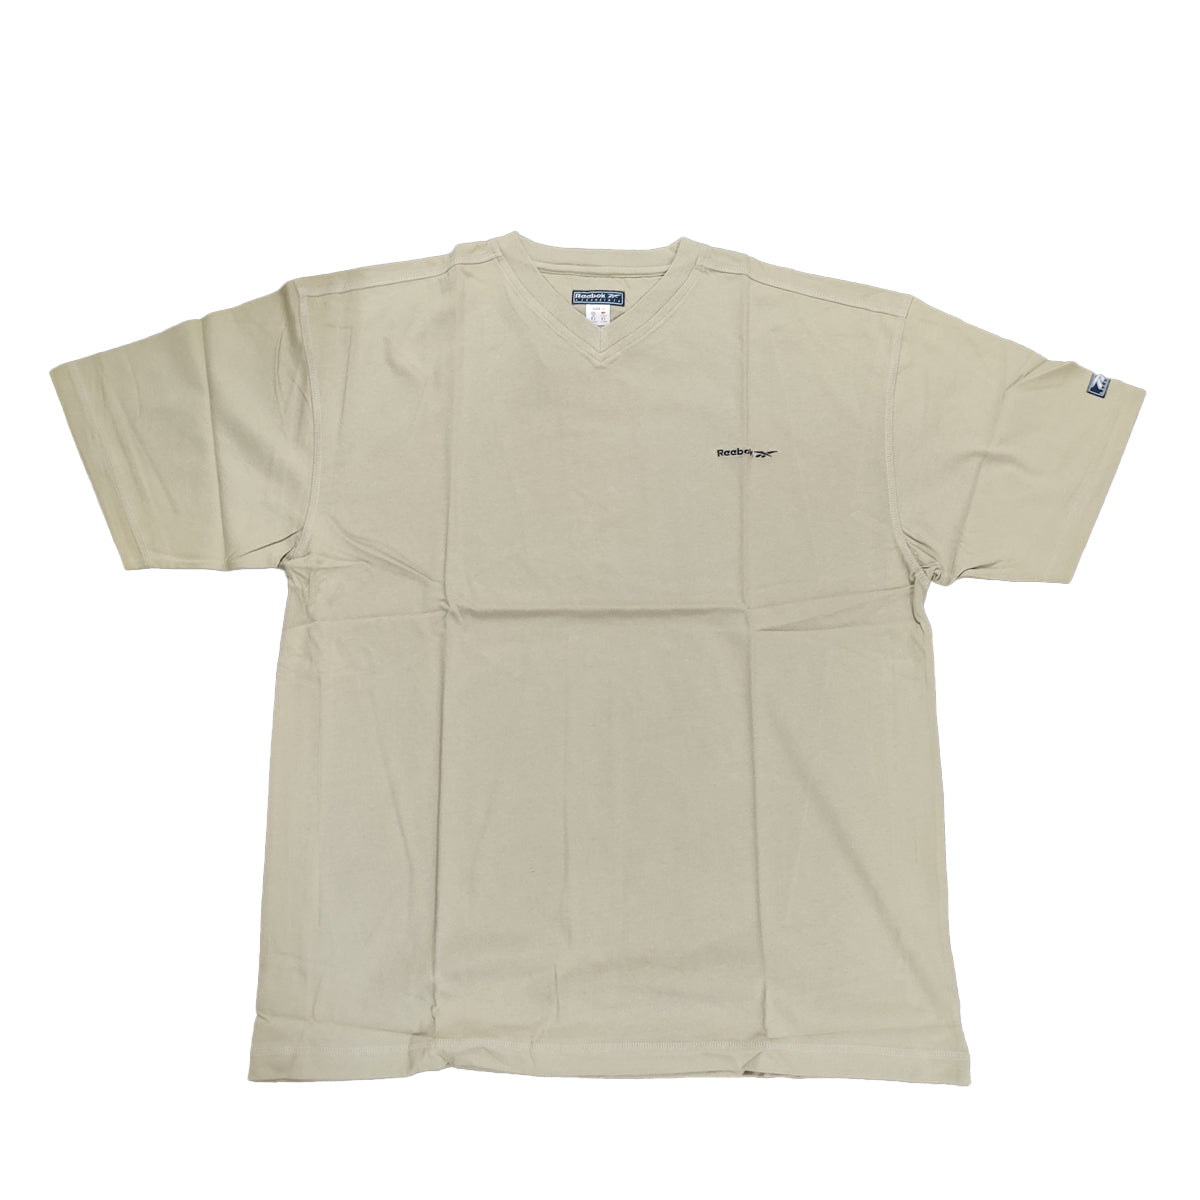 Reebok Mens Clearance Plain Olive V-Neck T-Shirt - Large